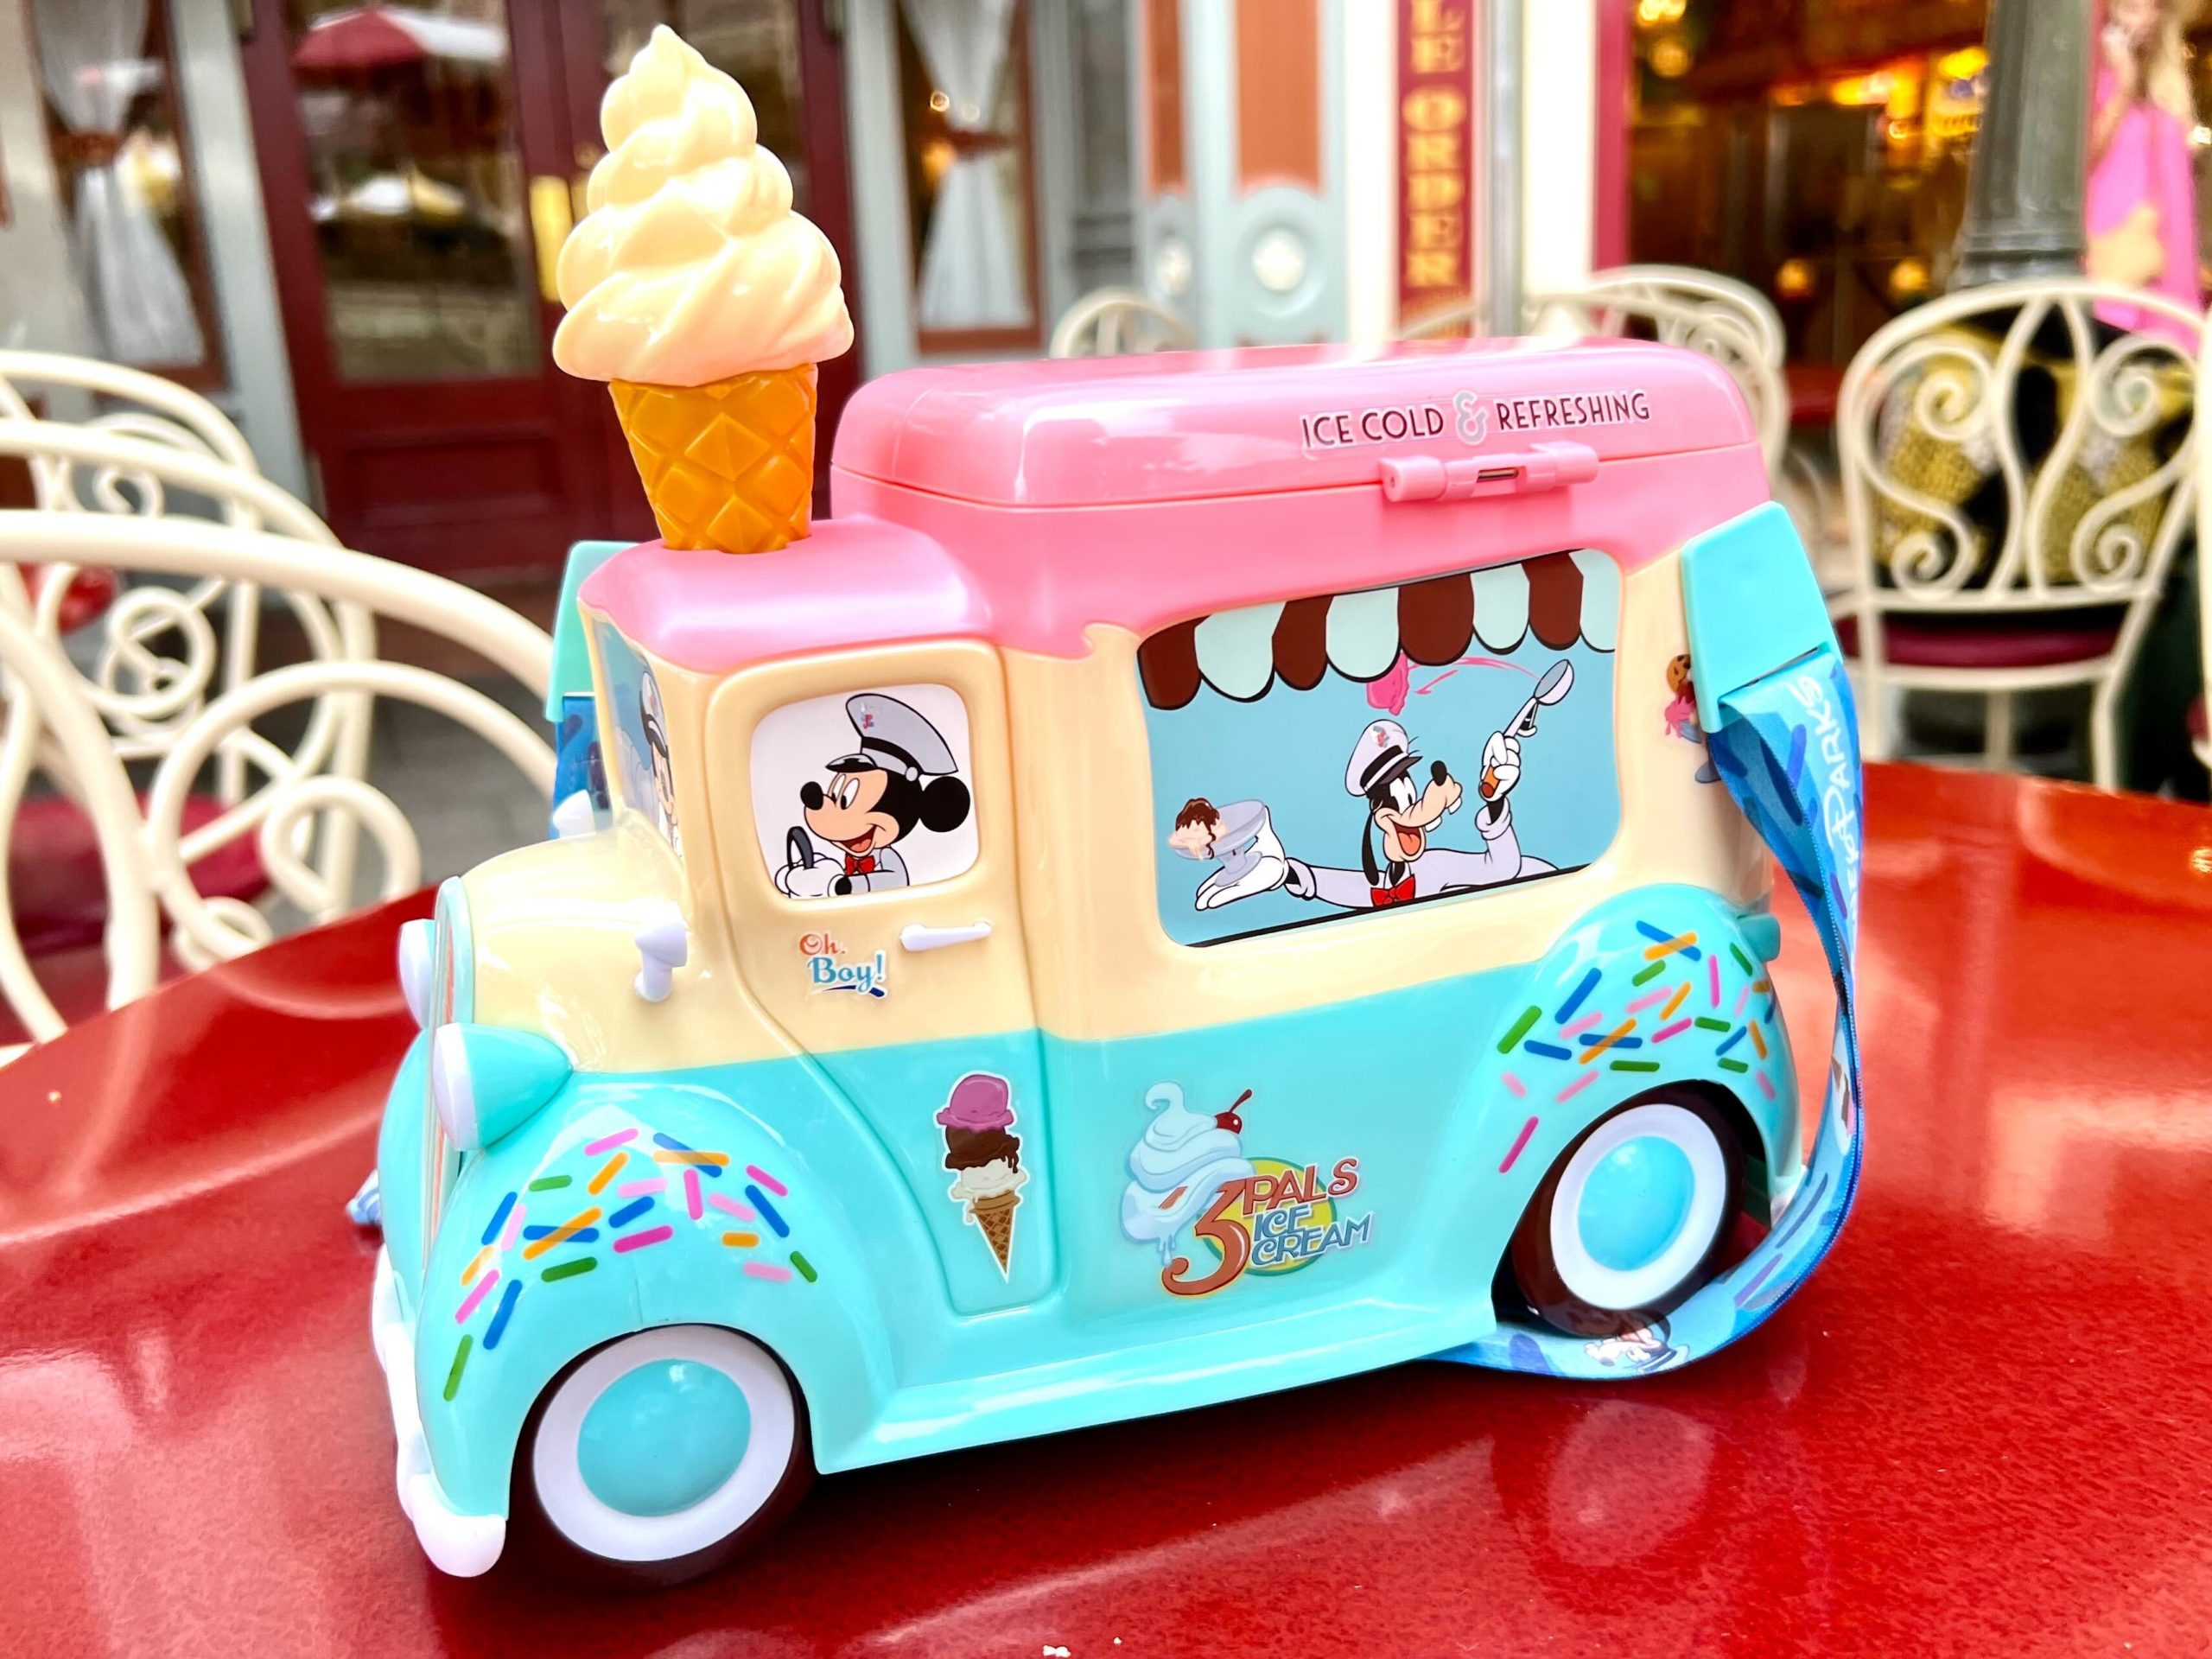 Mickey's ice cream truck